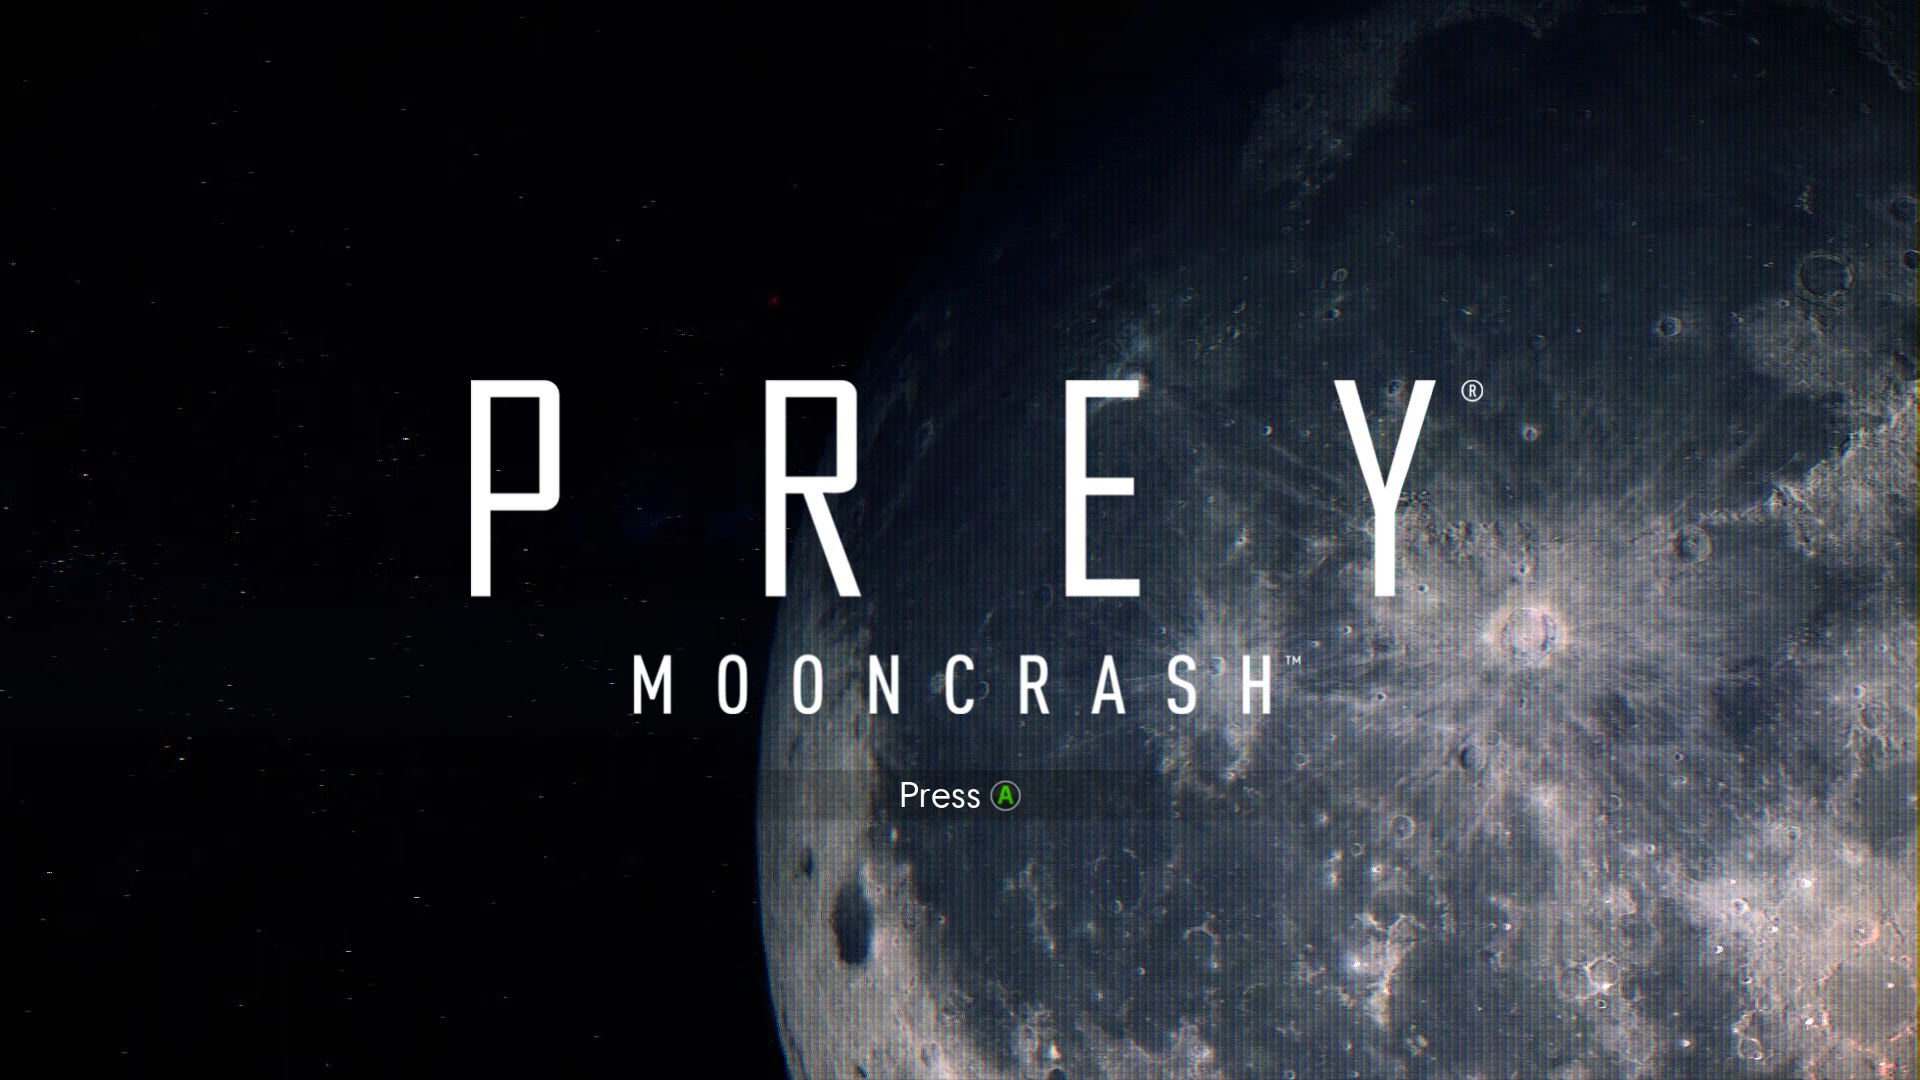 prey mooncrash escape by uploading mind